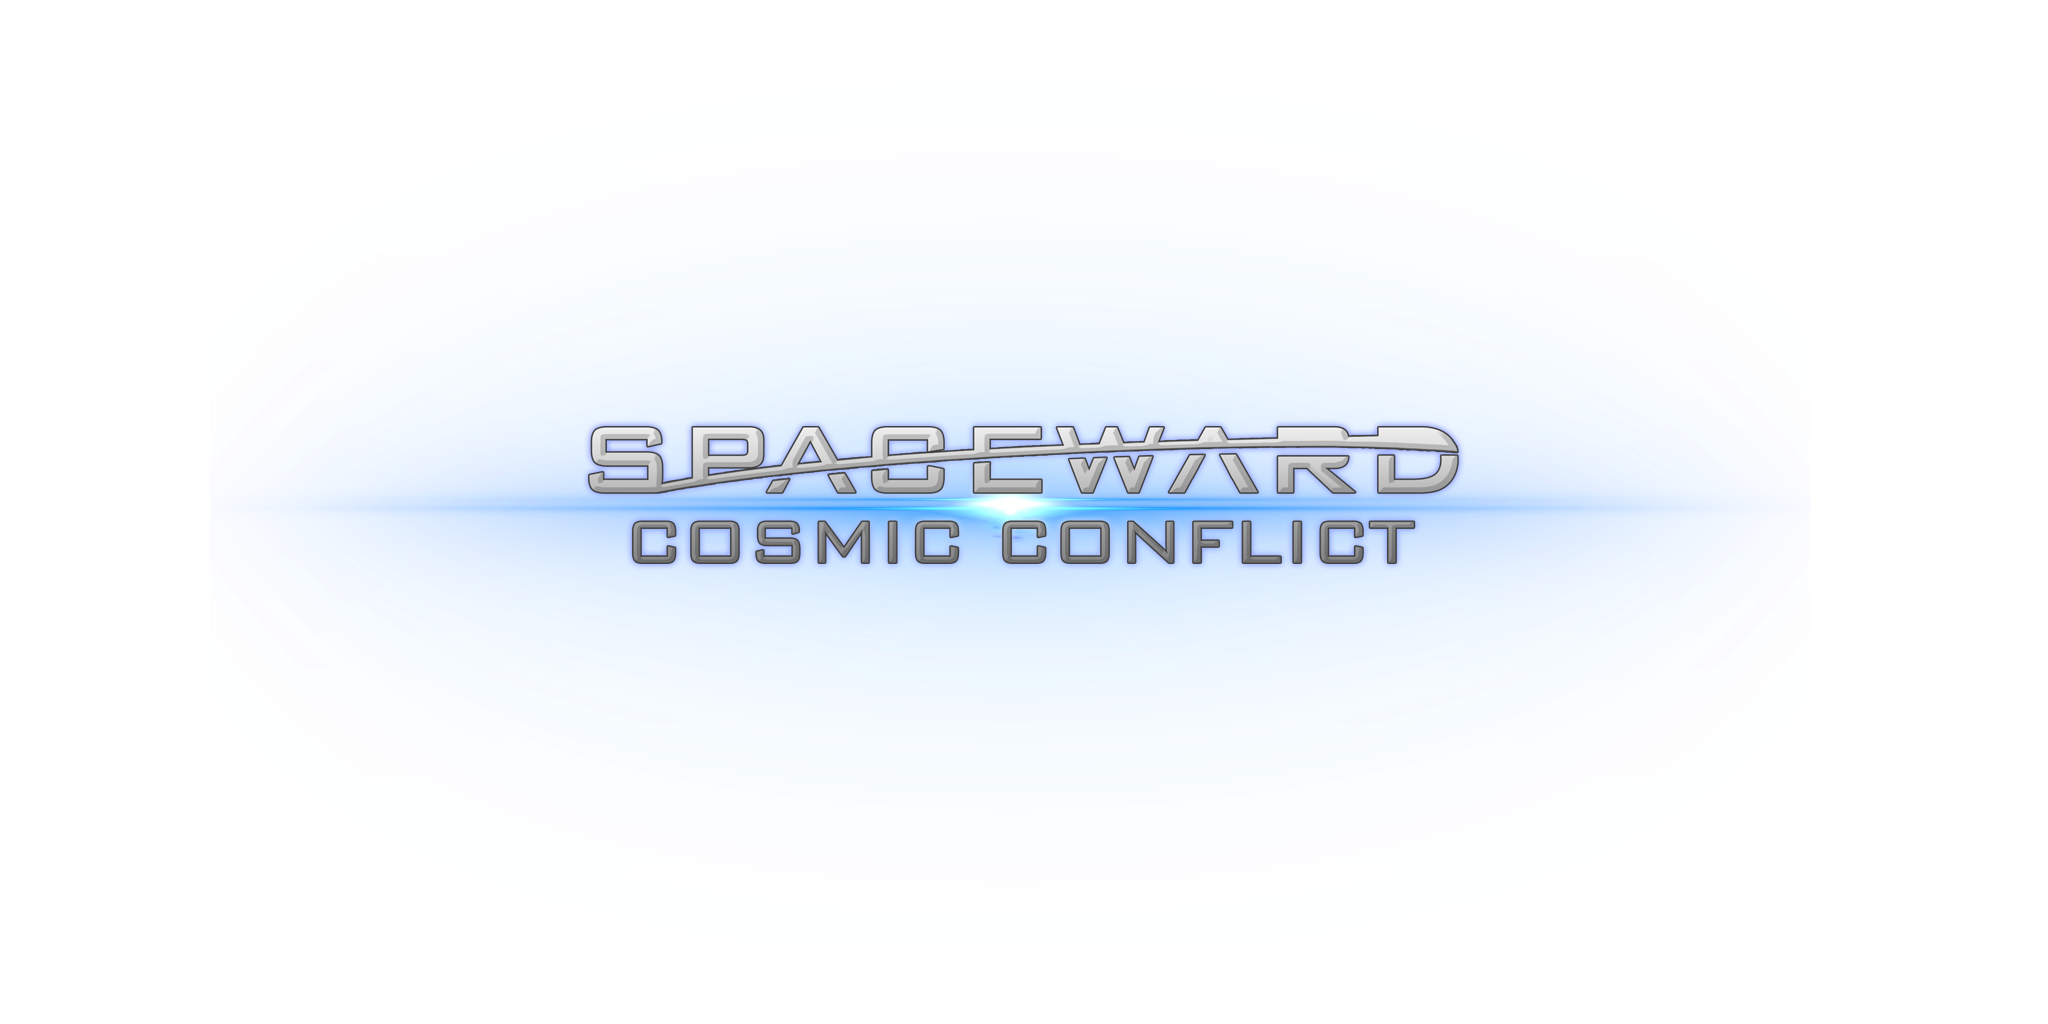 Spaceward Cosmic Conflict